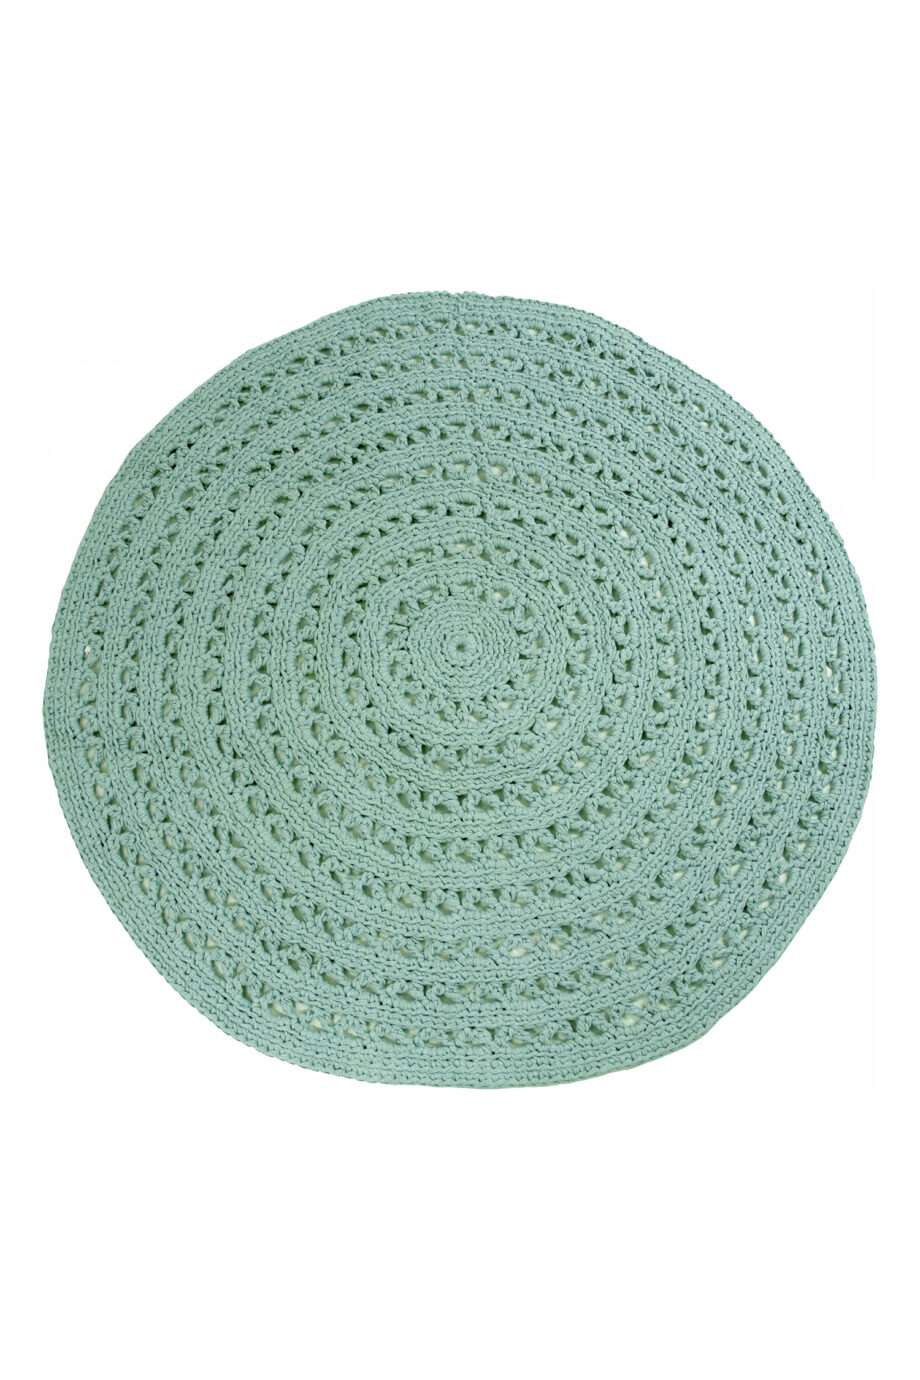 arab sea blue crochet cotton rug large